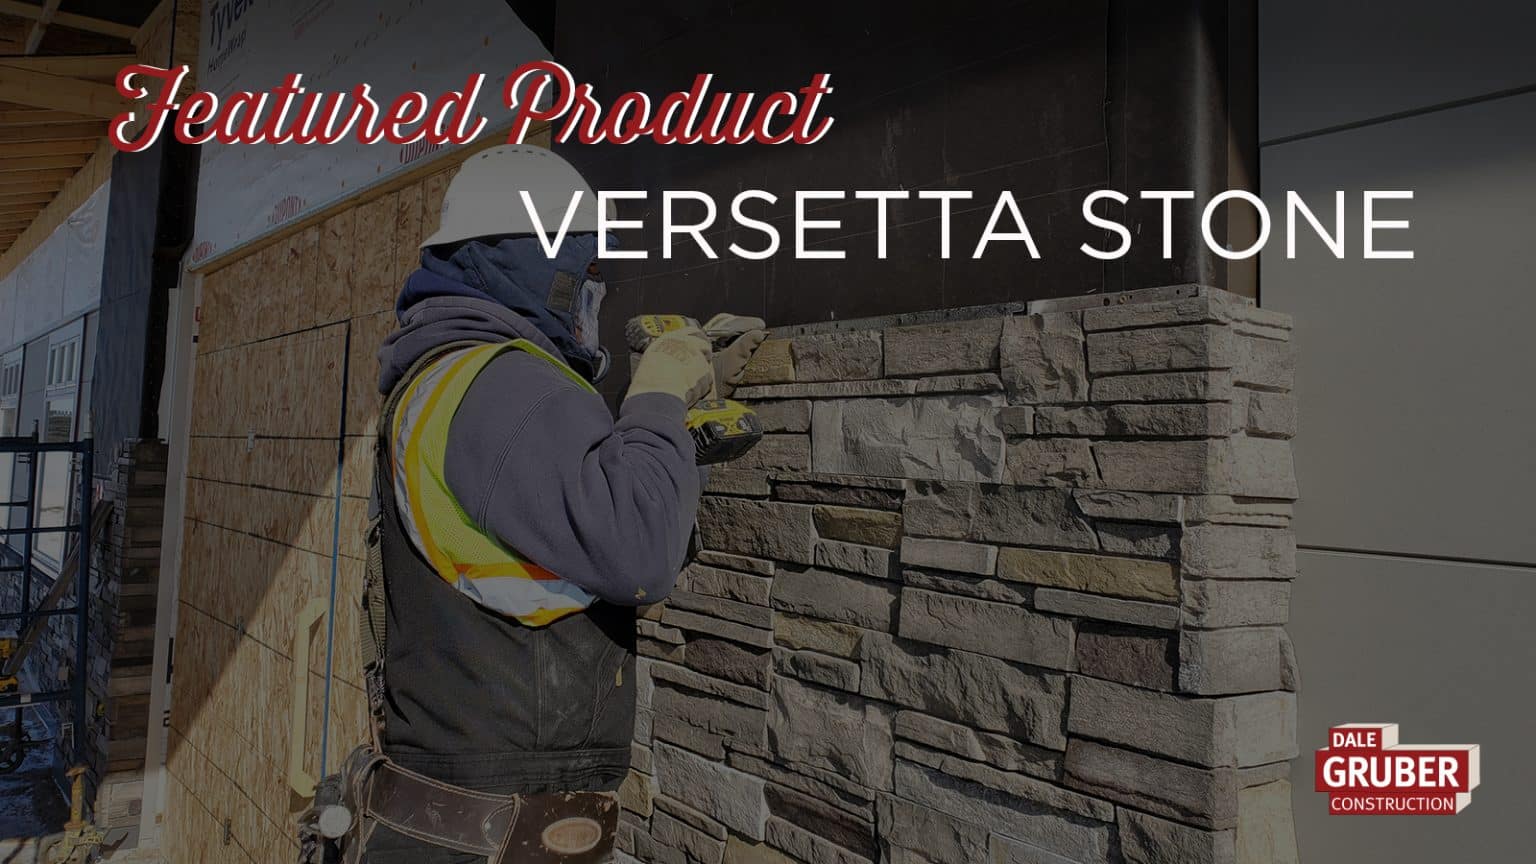 Featured Product: Versetta Stone